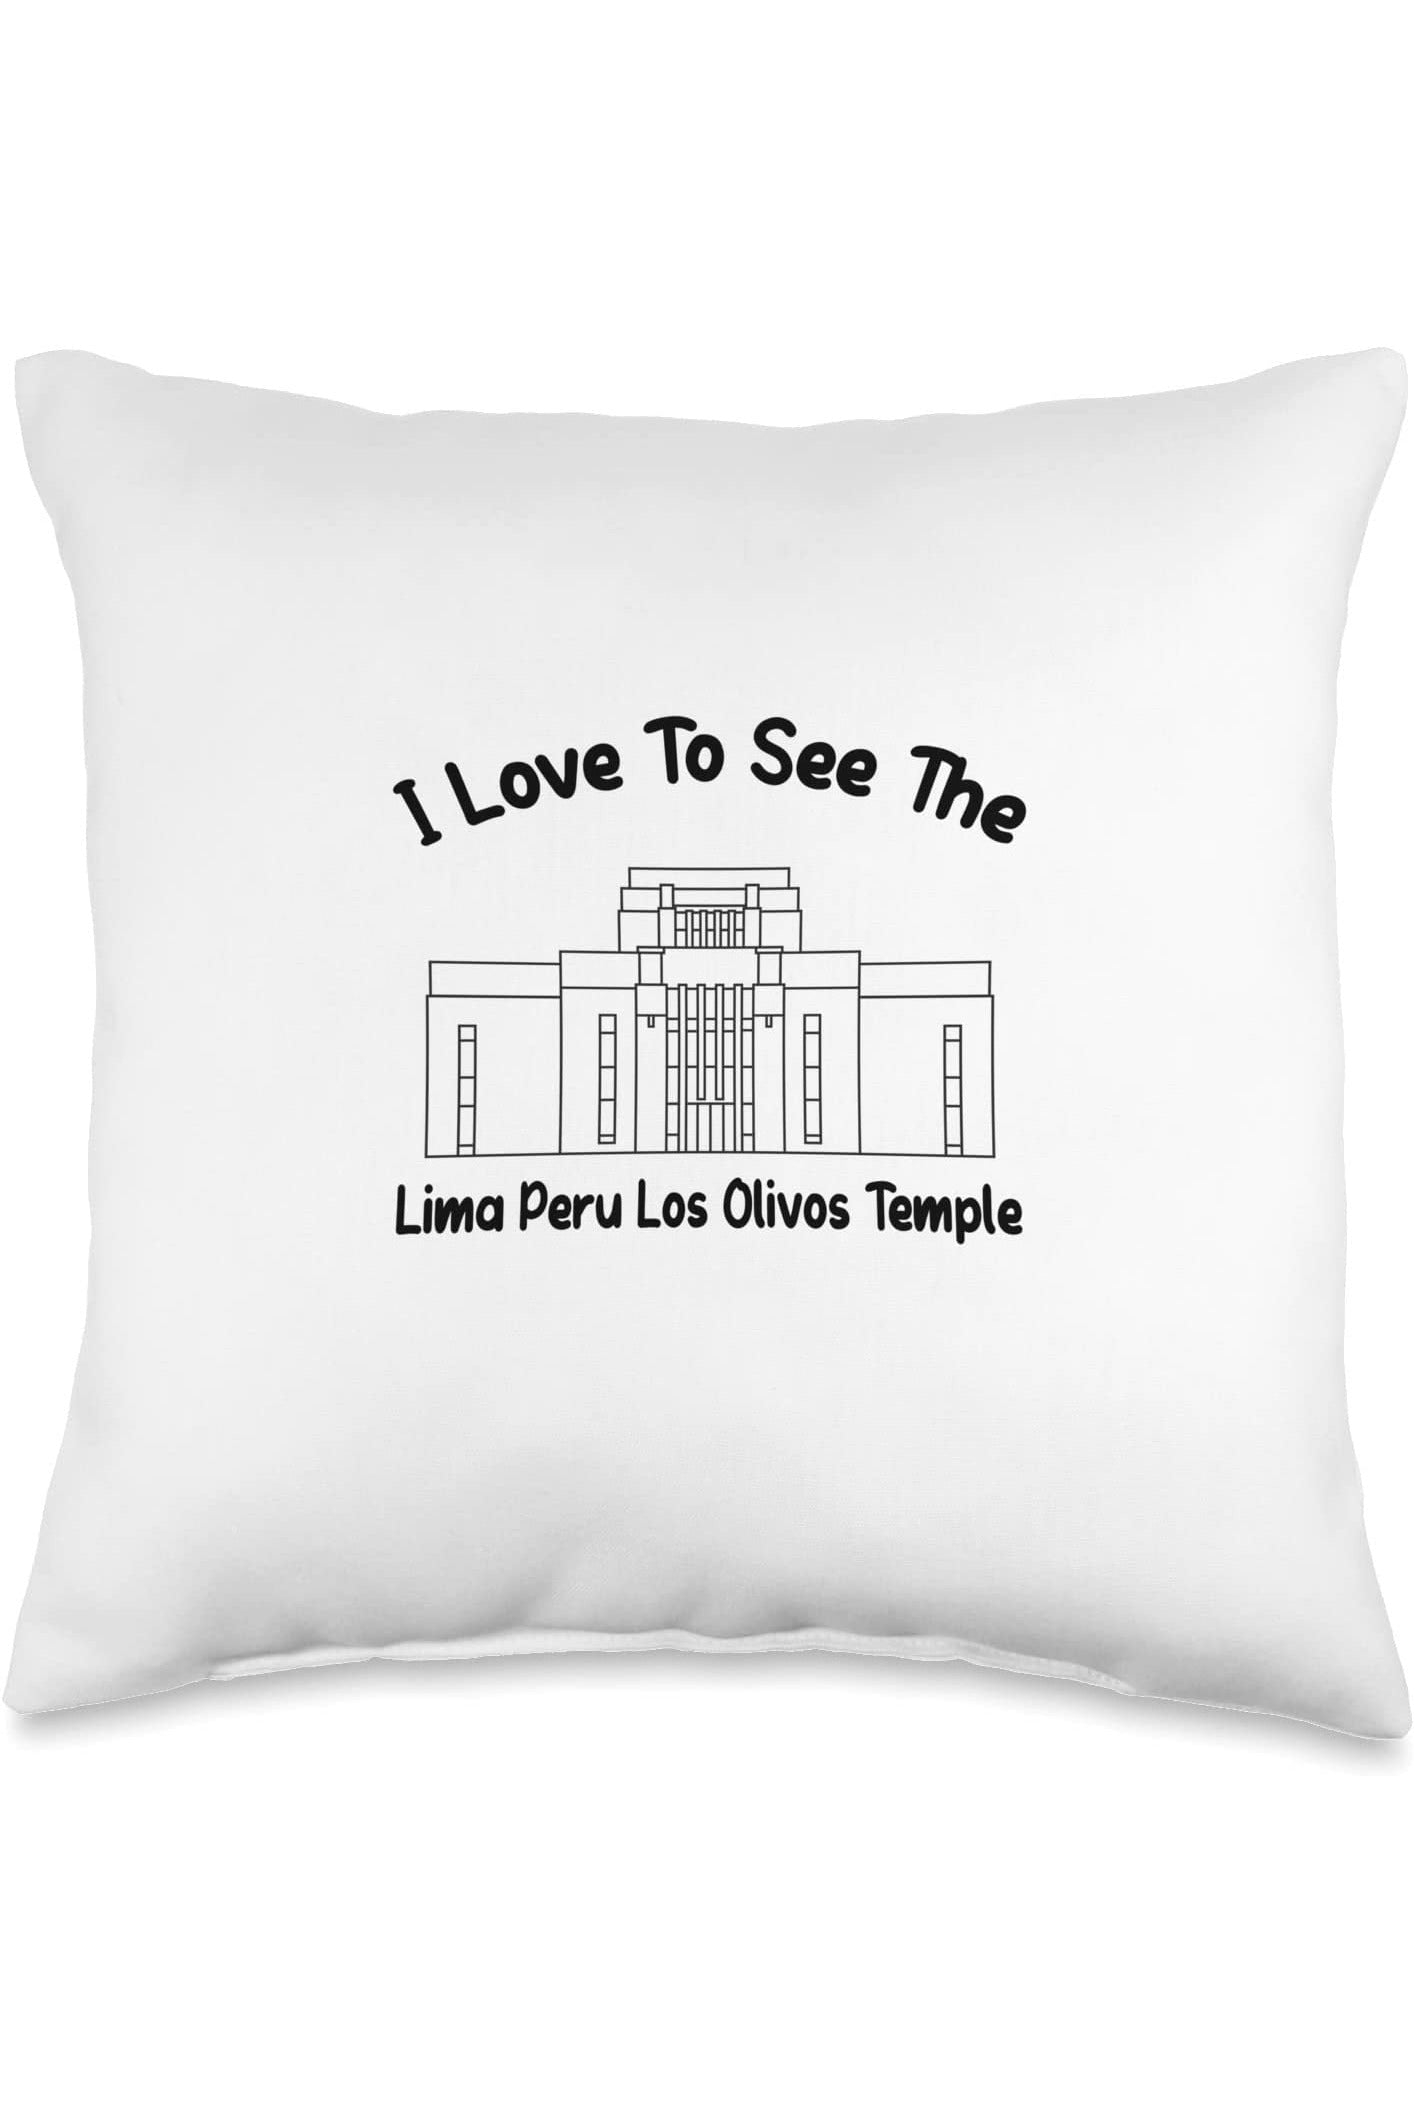 Lima Peru Los Olivos Temple Throw Pillows - Primary Style (English) US